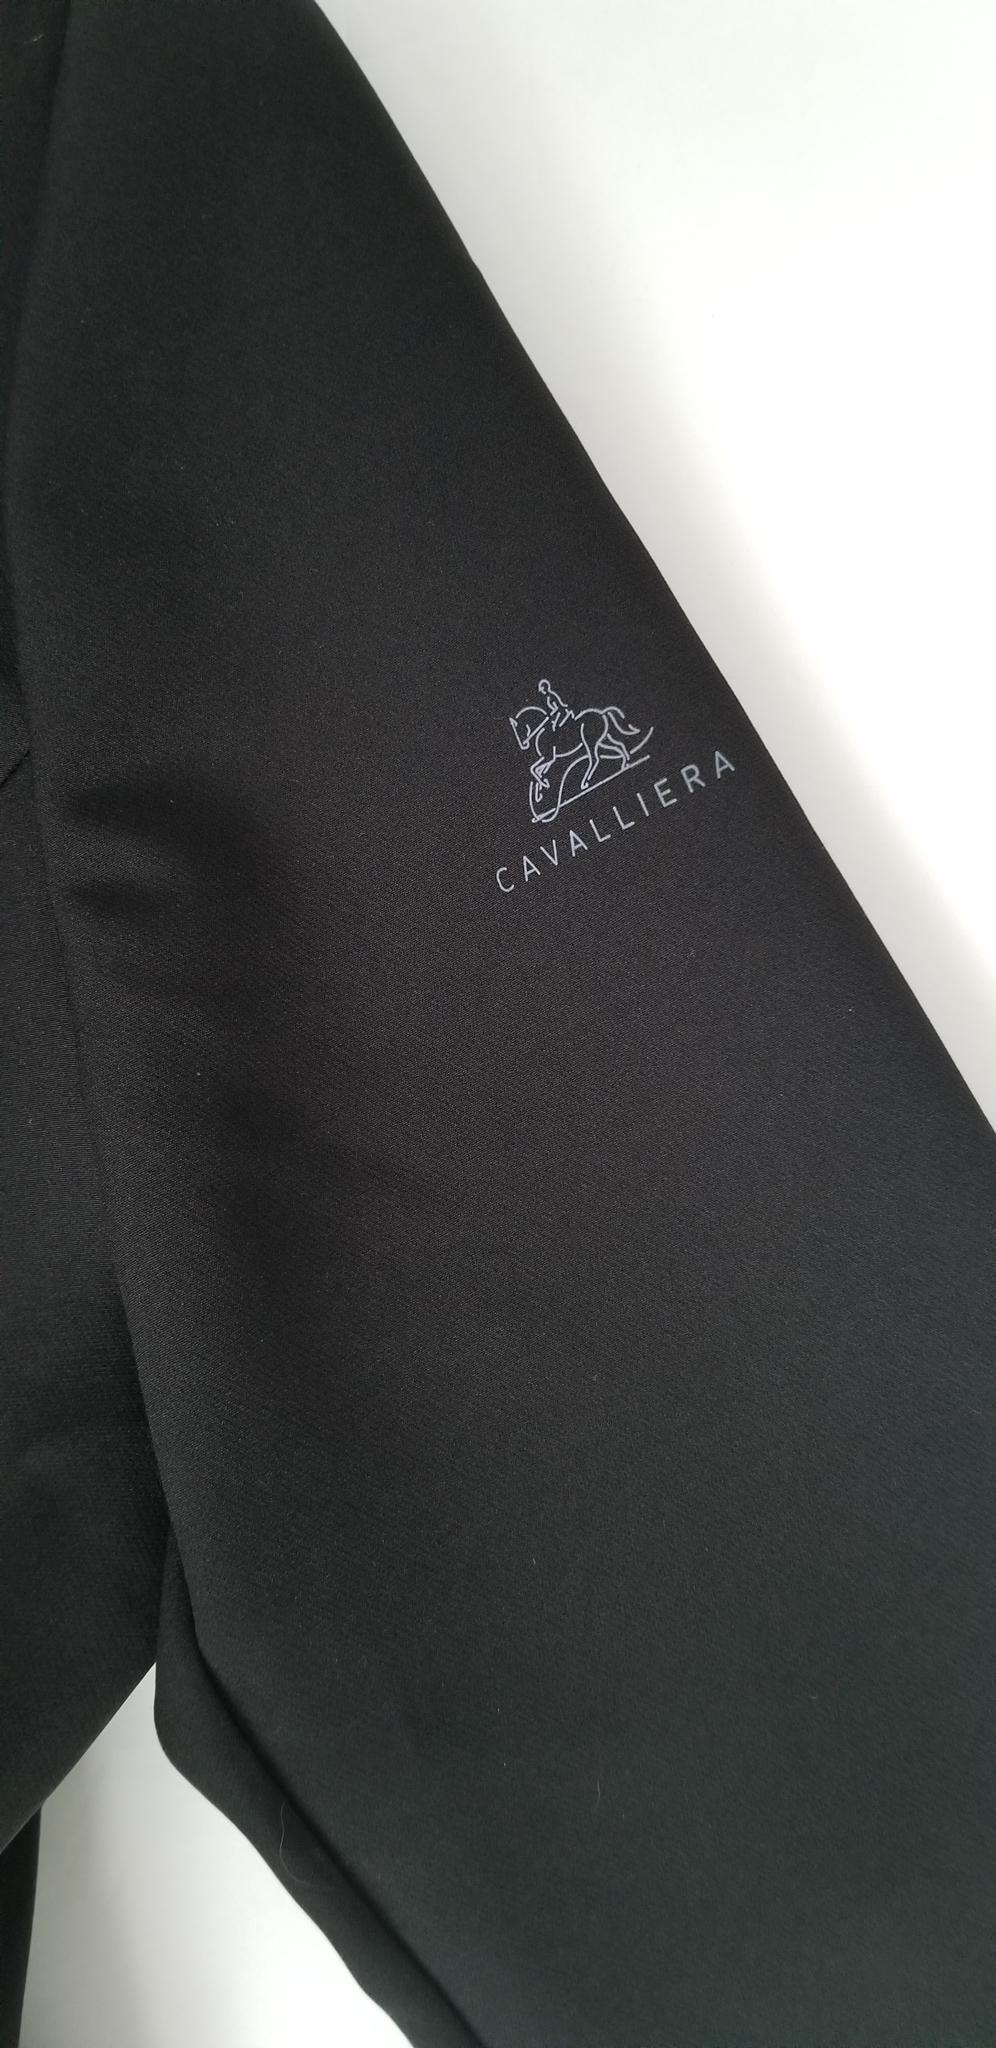 Cavalliera Venice Show Jacket - Black - Medium